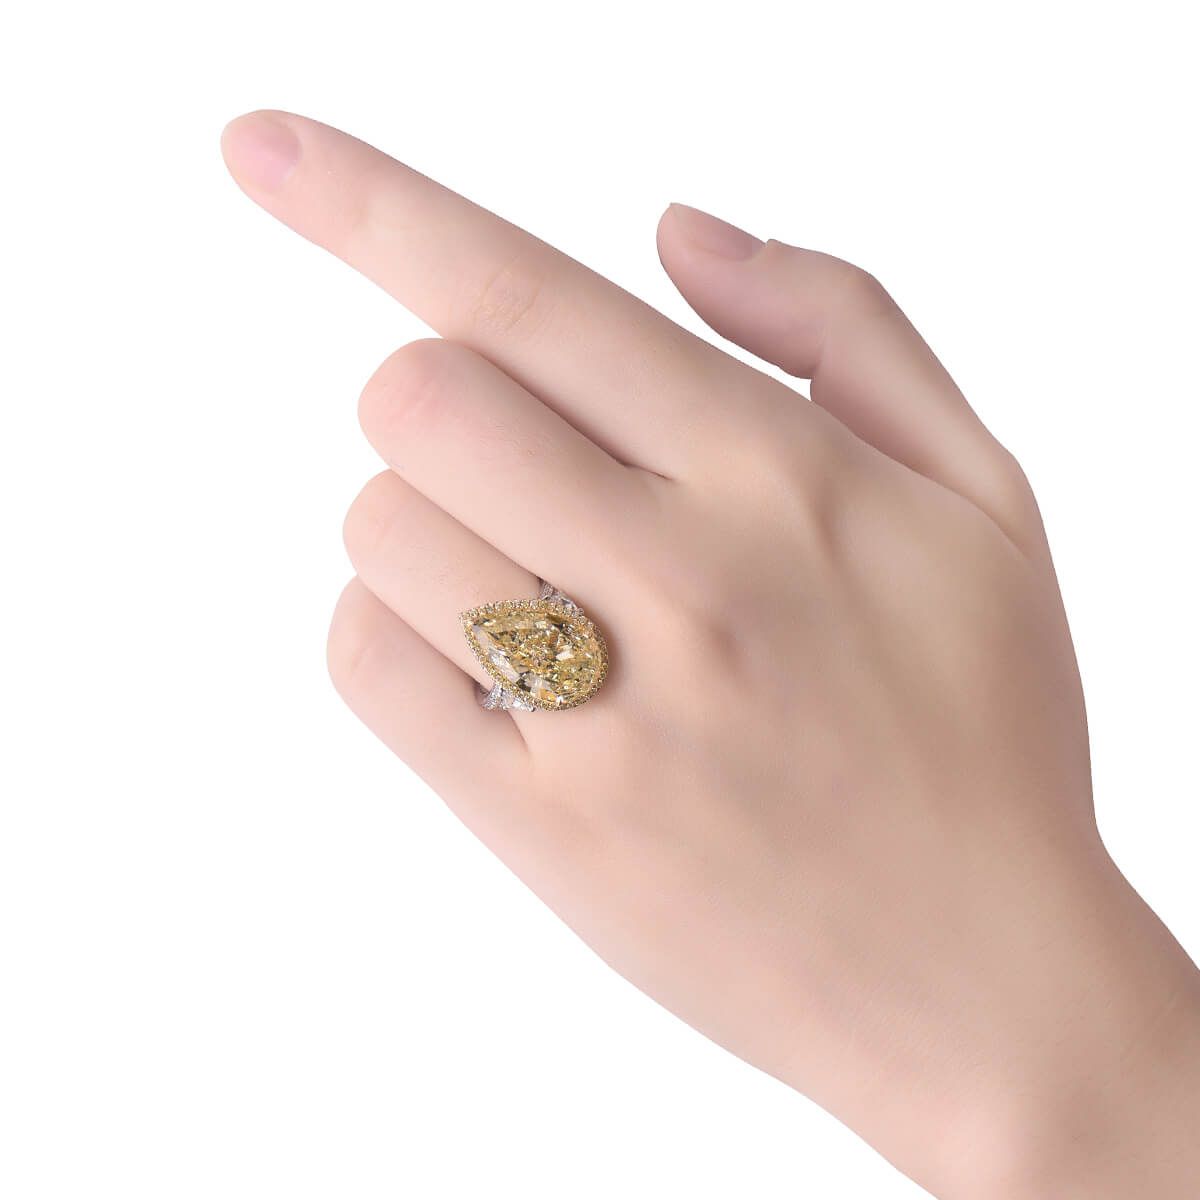 Fancy Light Yellow Diamond Ring, 0.90 Carat, Pear shape, GIA Certified, 2155101503